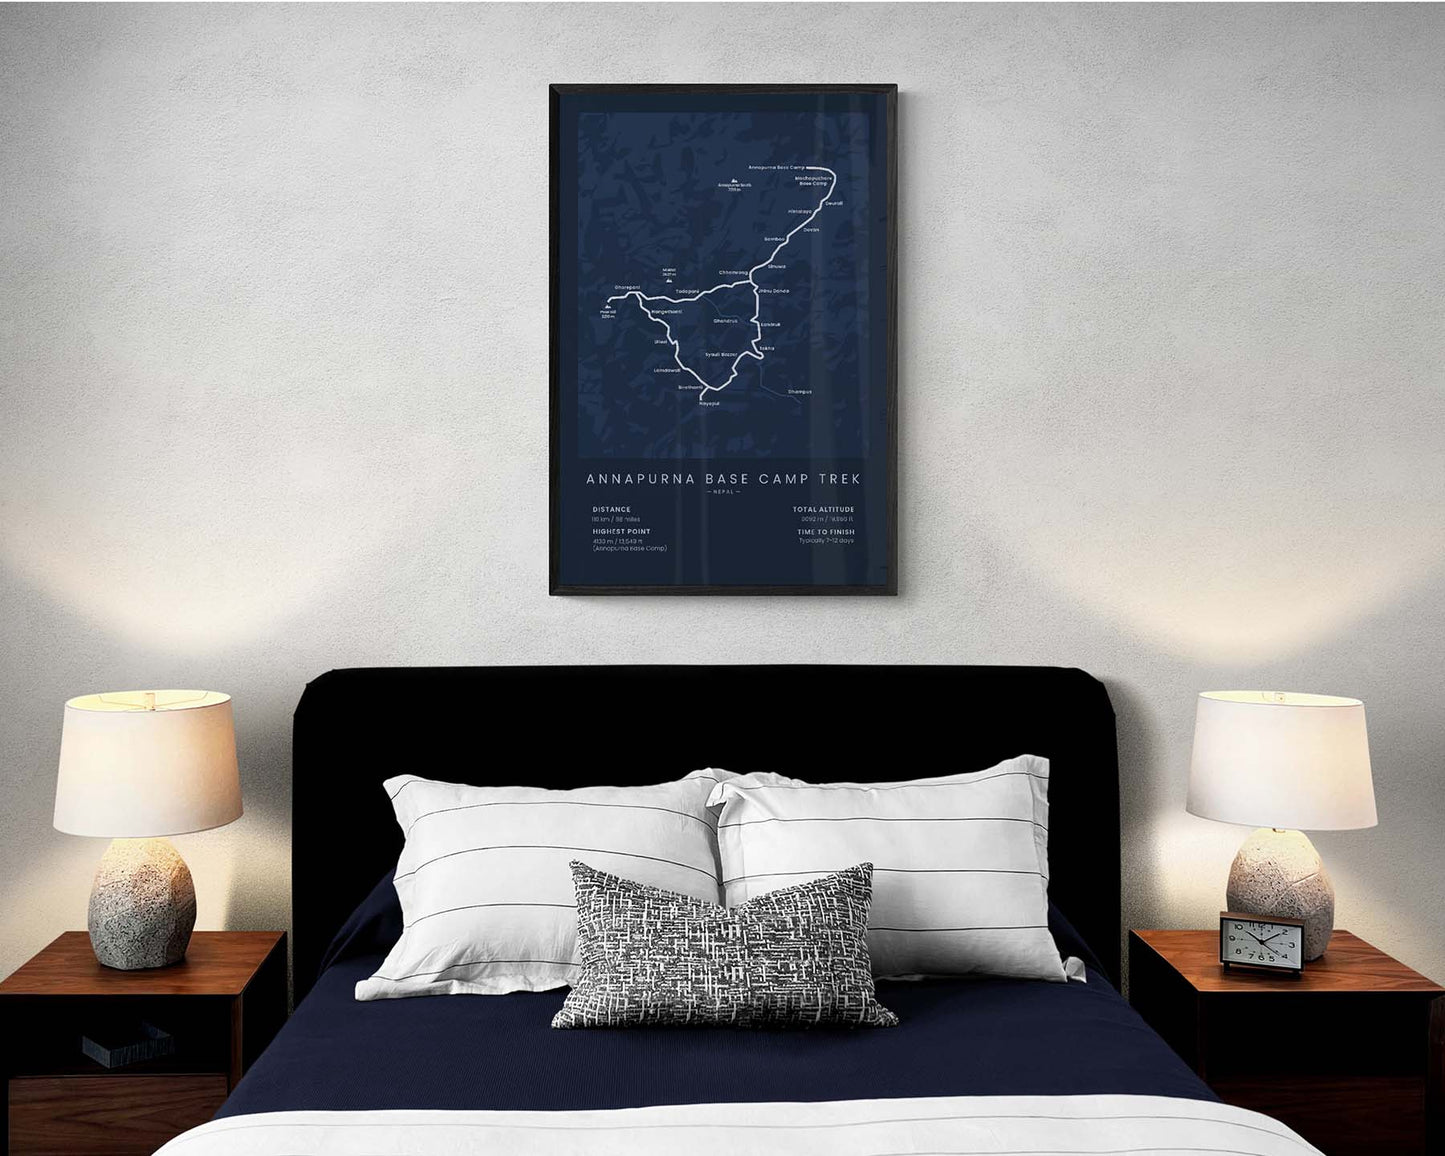 ABC (Himalayas) track map art in minimal room decor